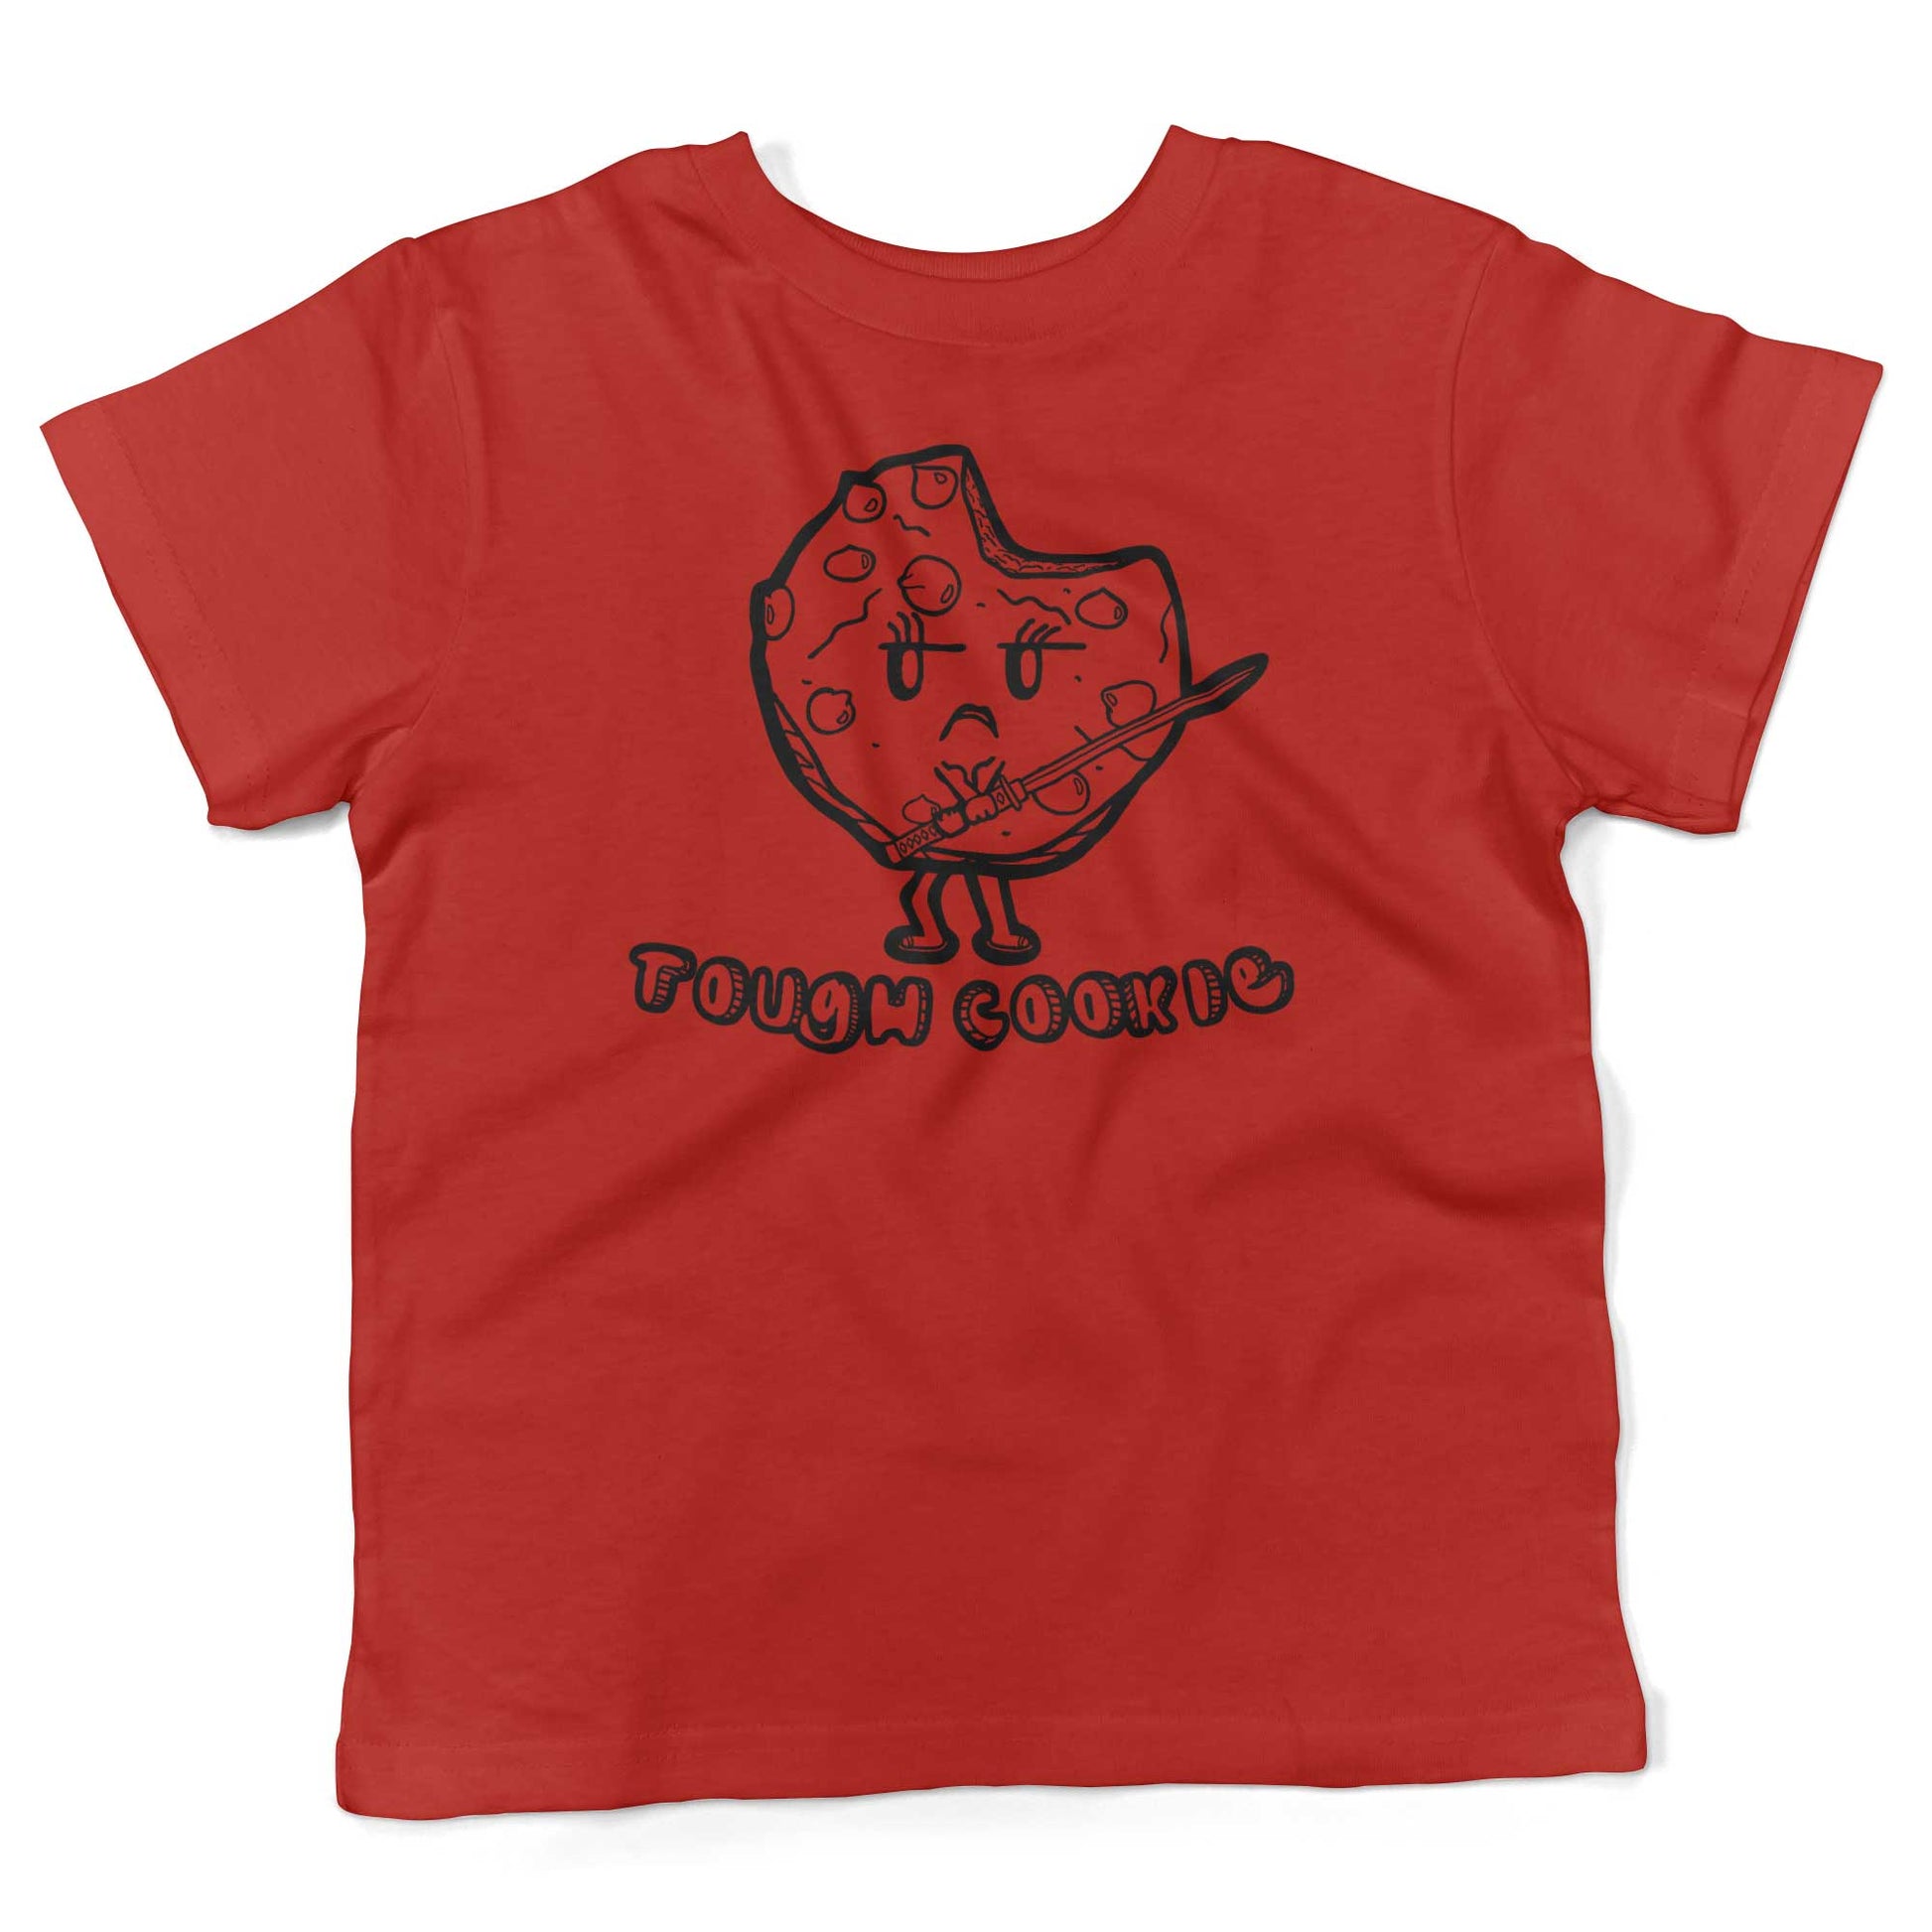 Tough Cookie Toddler Shirt-Red-2T